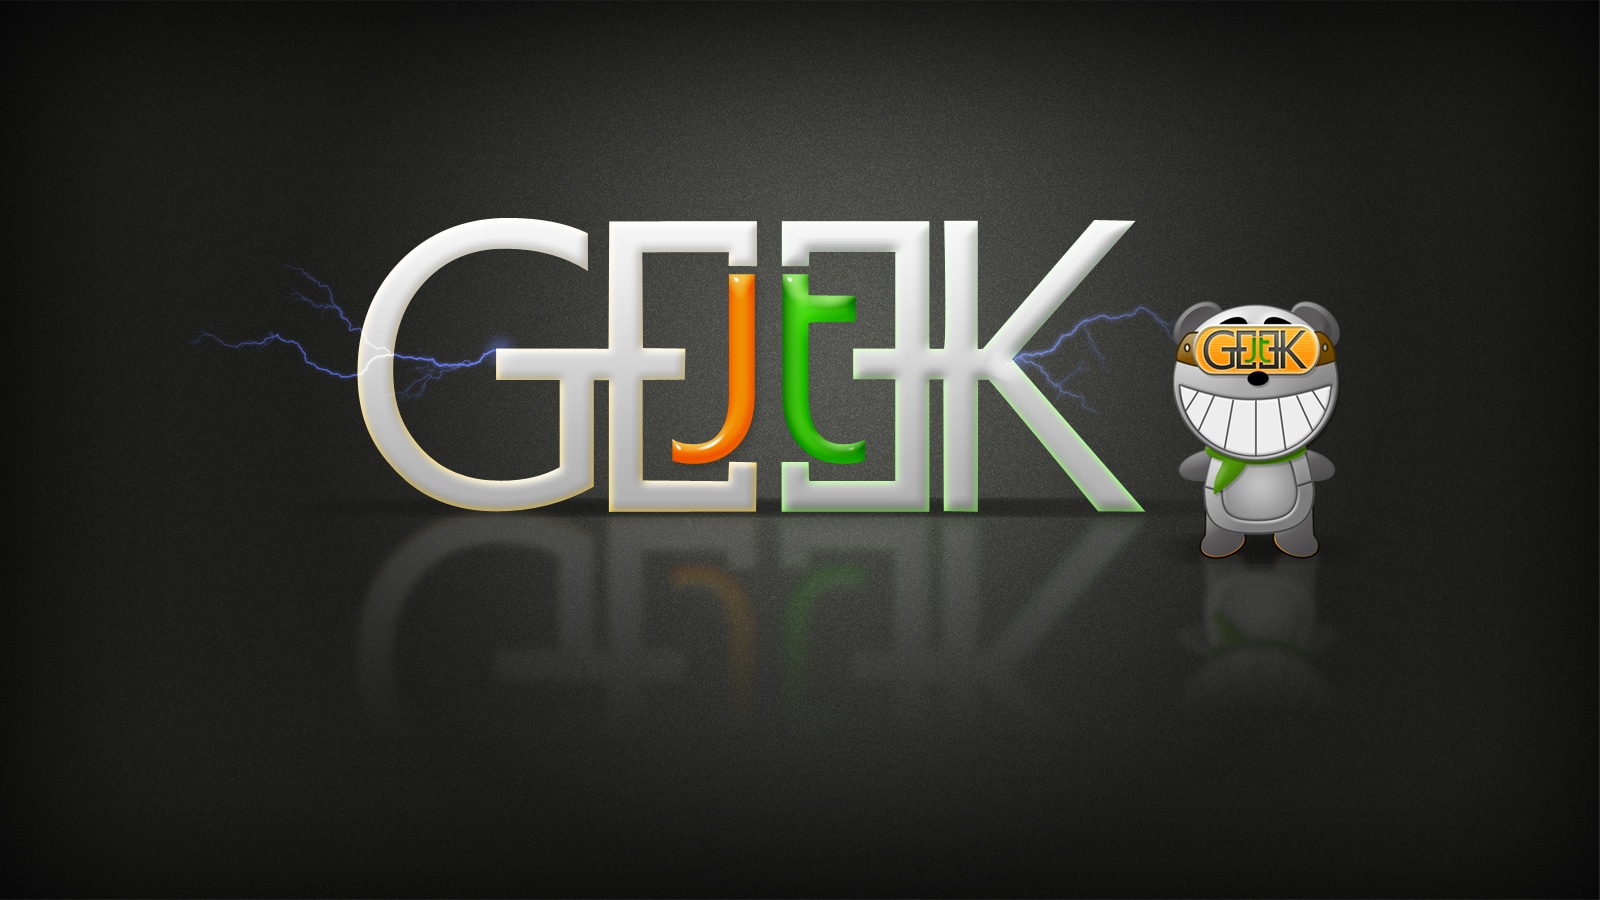 fond d'écran du jt geek avec pangeek au format hd 16:9